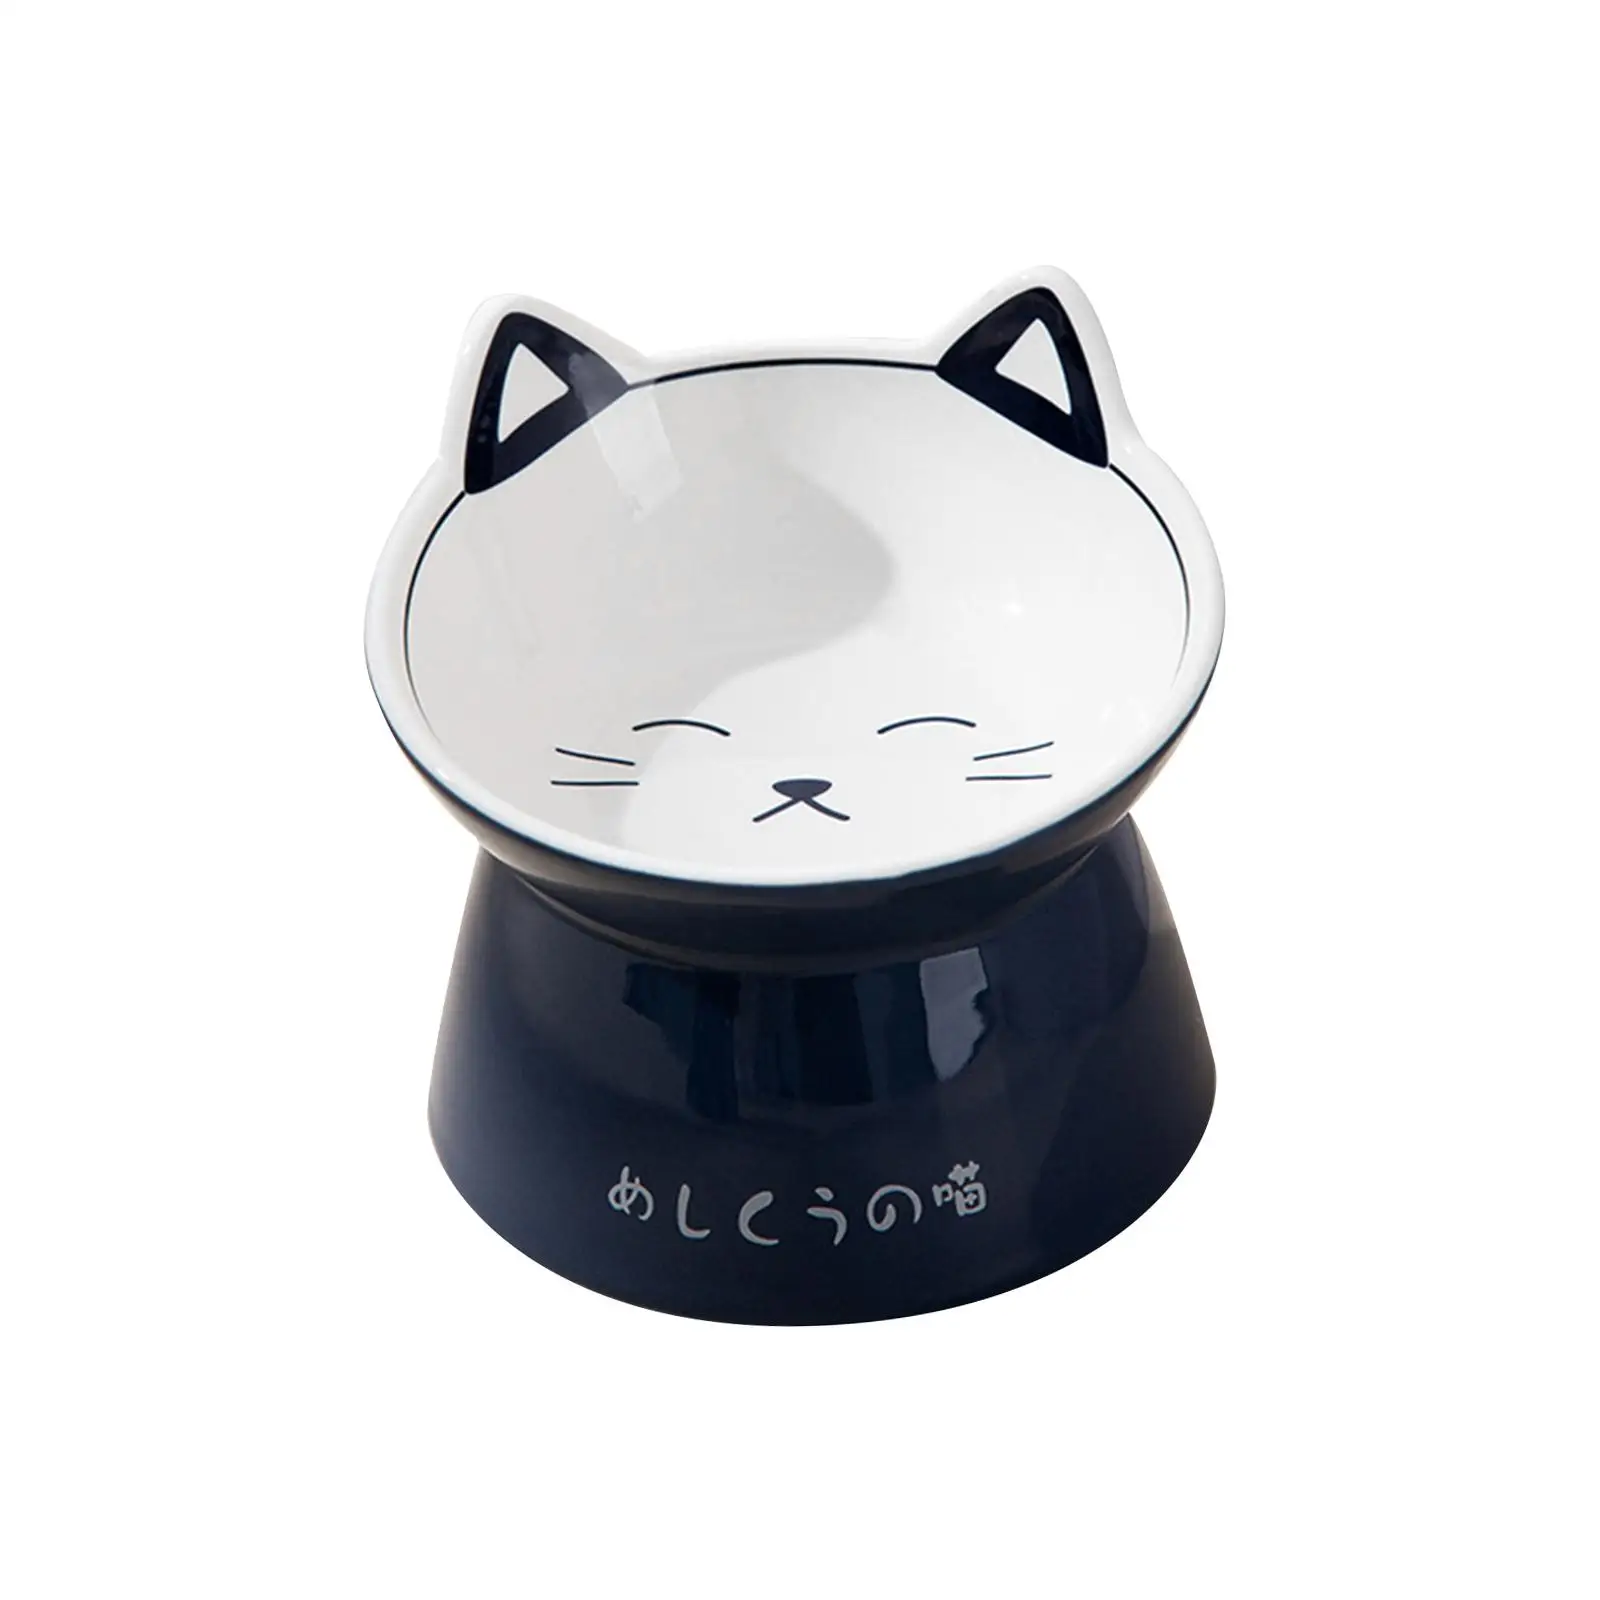 Ceramic Raised Cat Food Bowl dish Easily Wash Durable Adorable Pattern